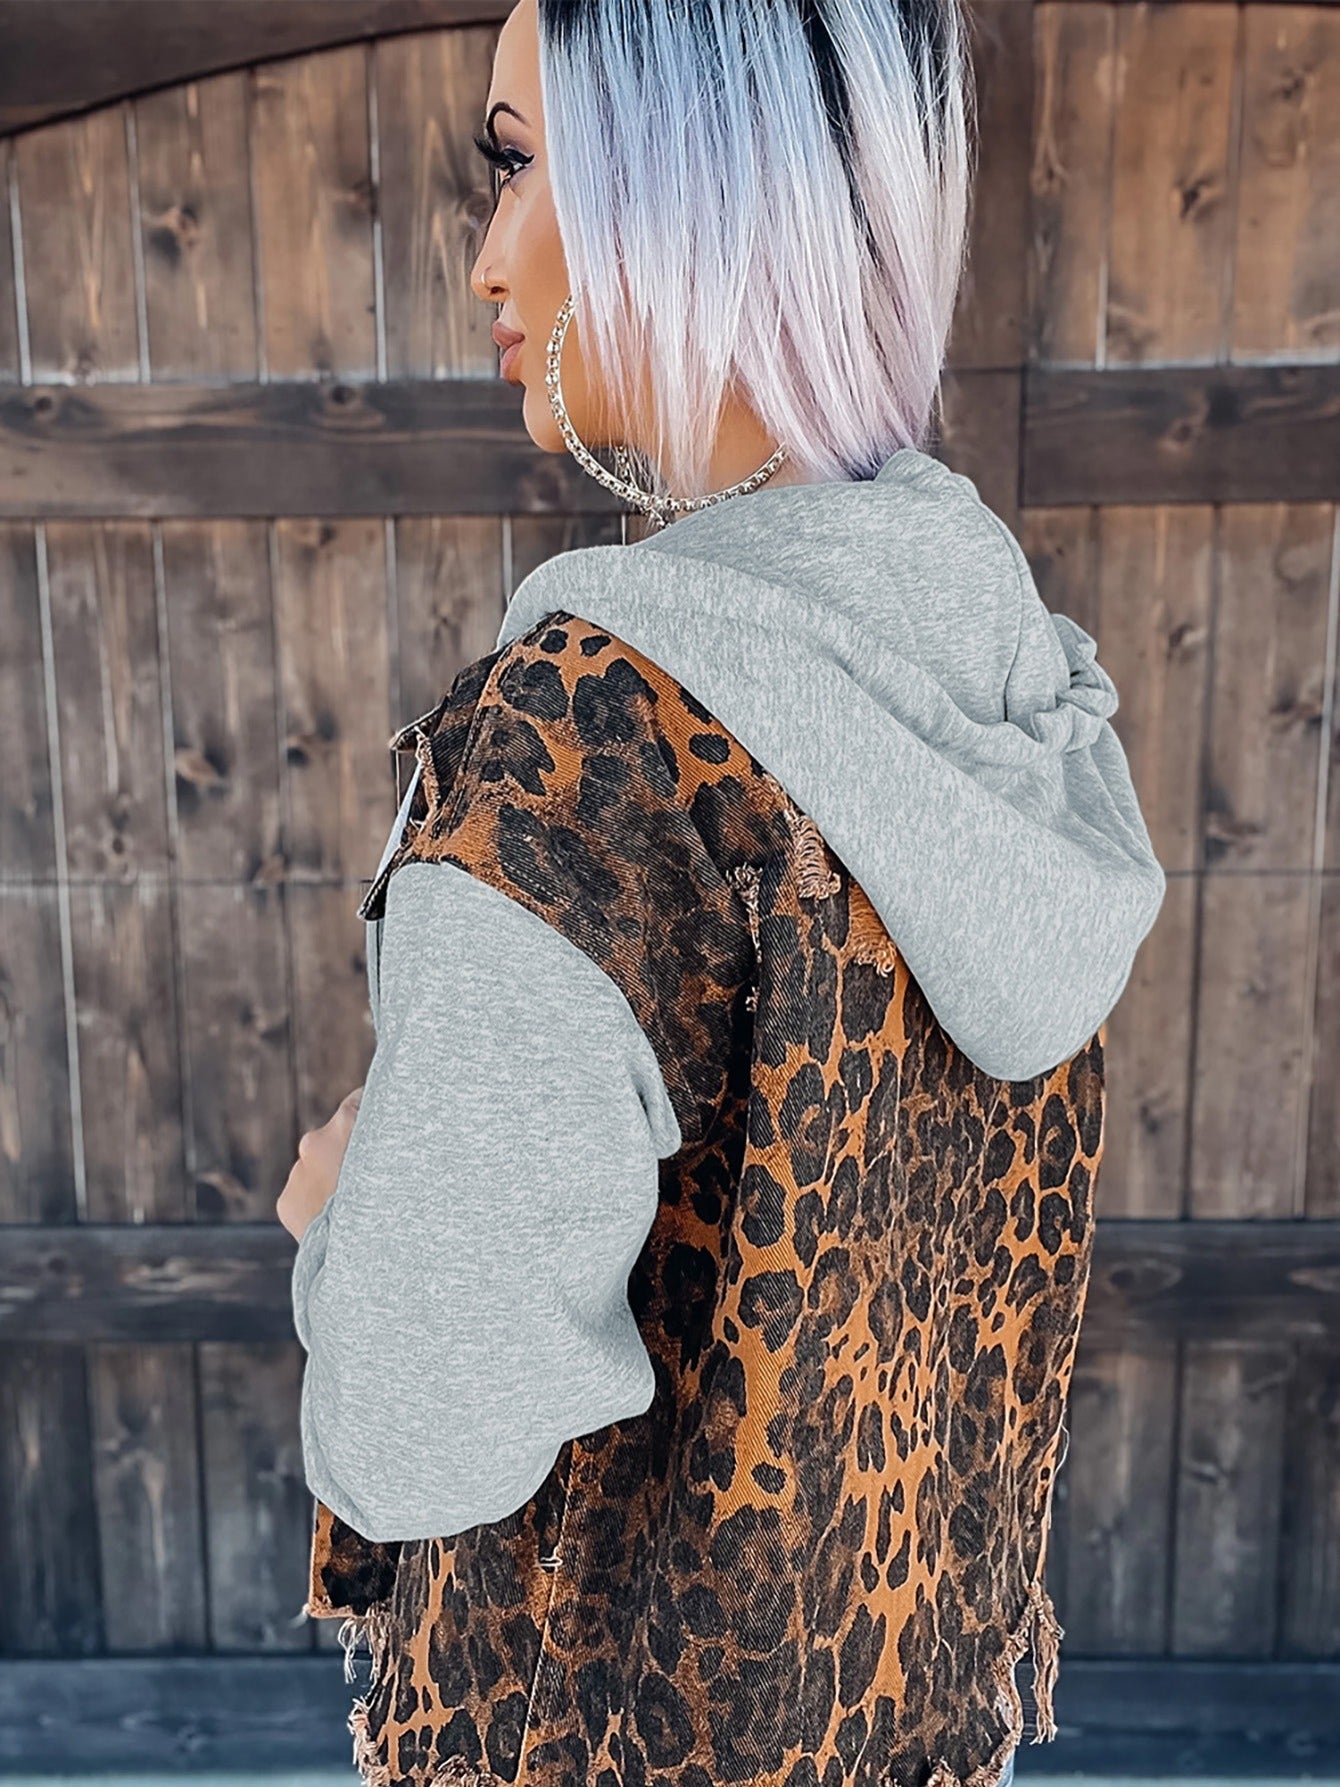 Lovevop-Leopard Print Patchwork Hooded Denim Jackets, Ripped Raw Hem Distressed Long Sleeve Denim Coats, Women's Denim & Clothing